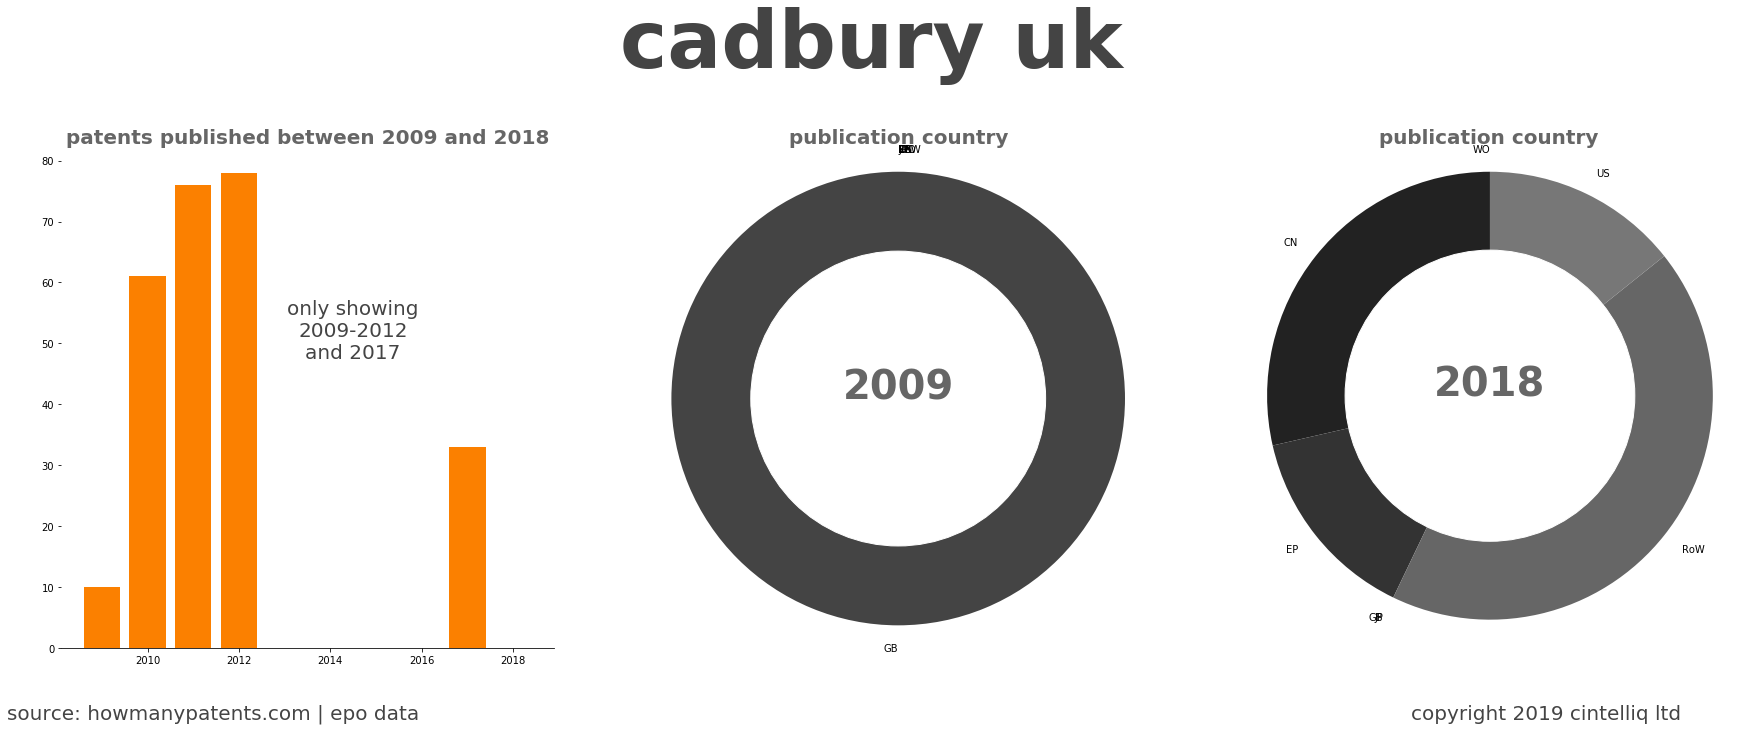 summary of patents for Cadbury Uk